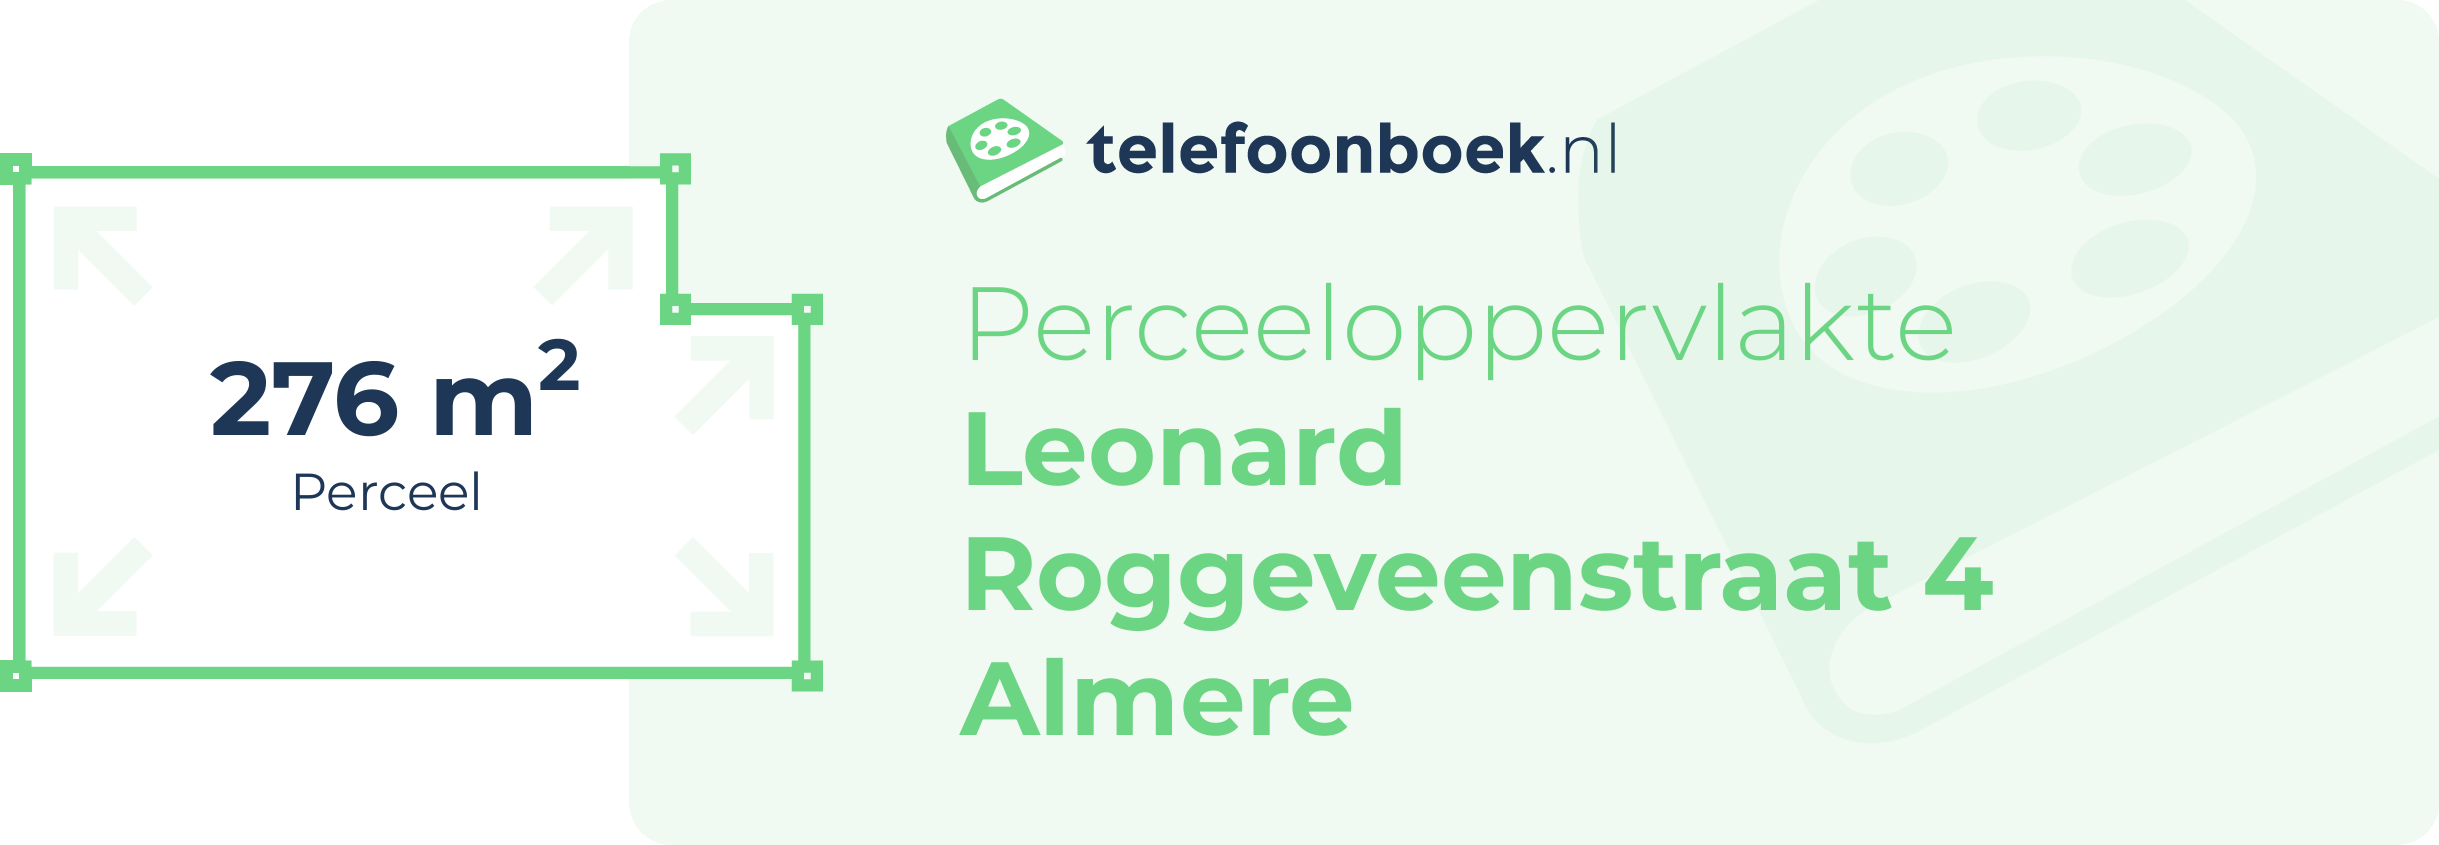 Perceeloppervlakte Leonard Roggeveenstraat 4 Almere